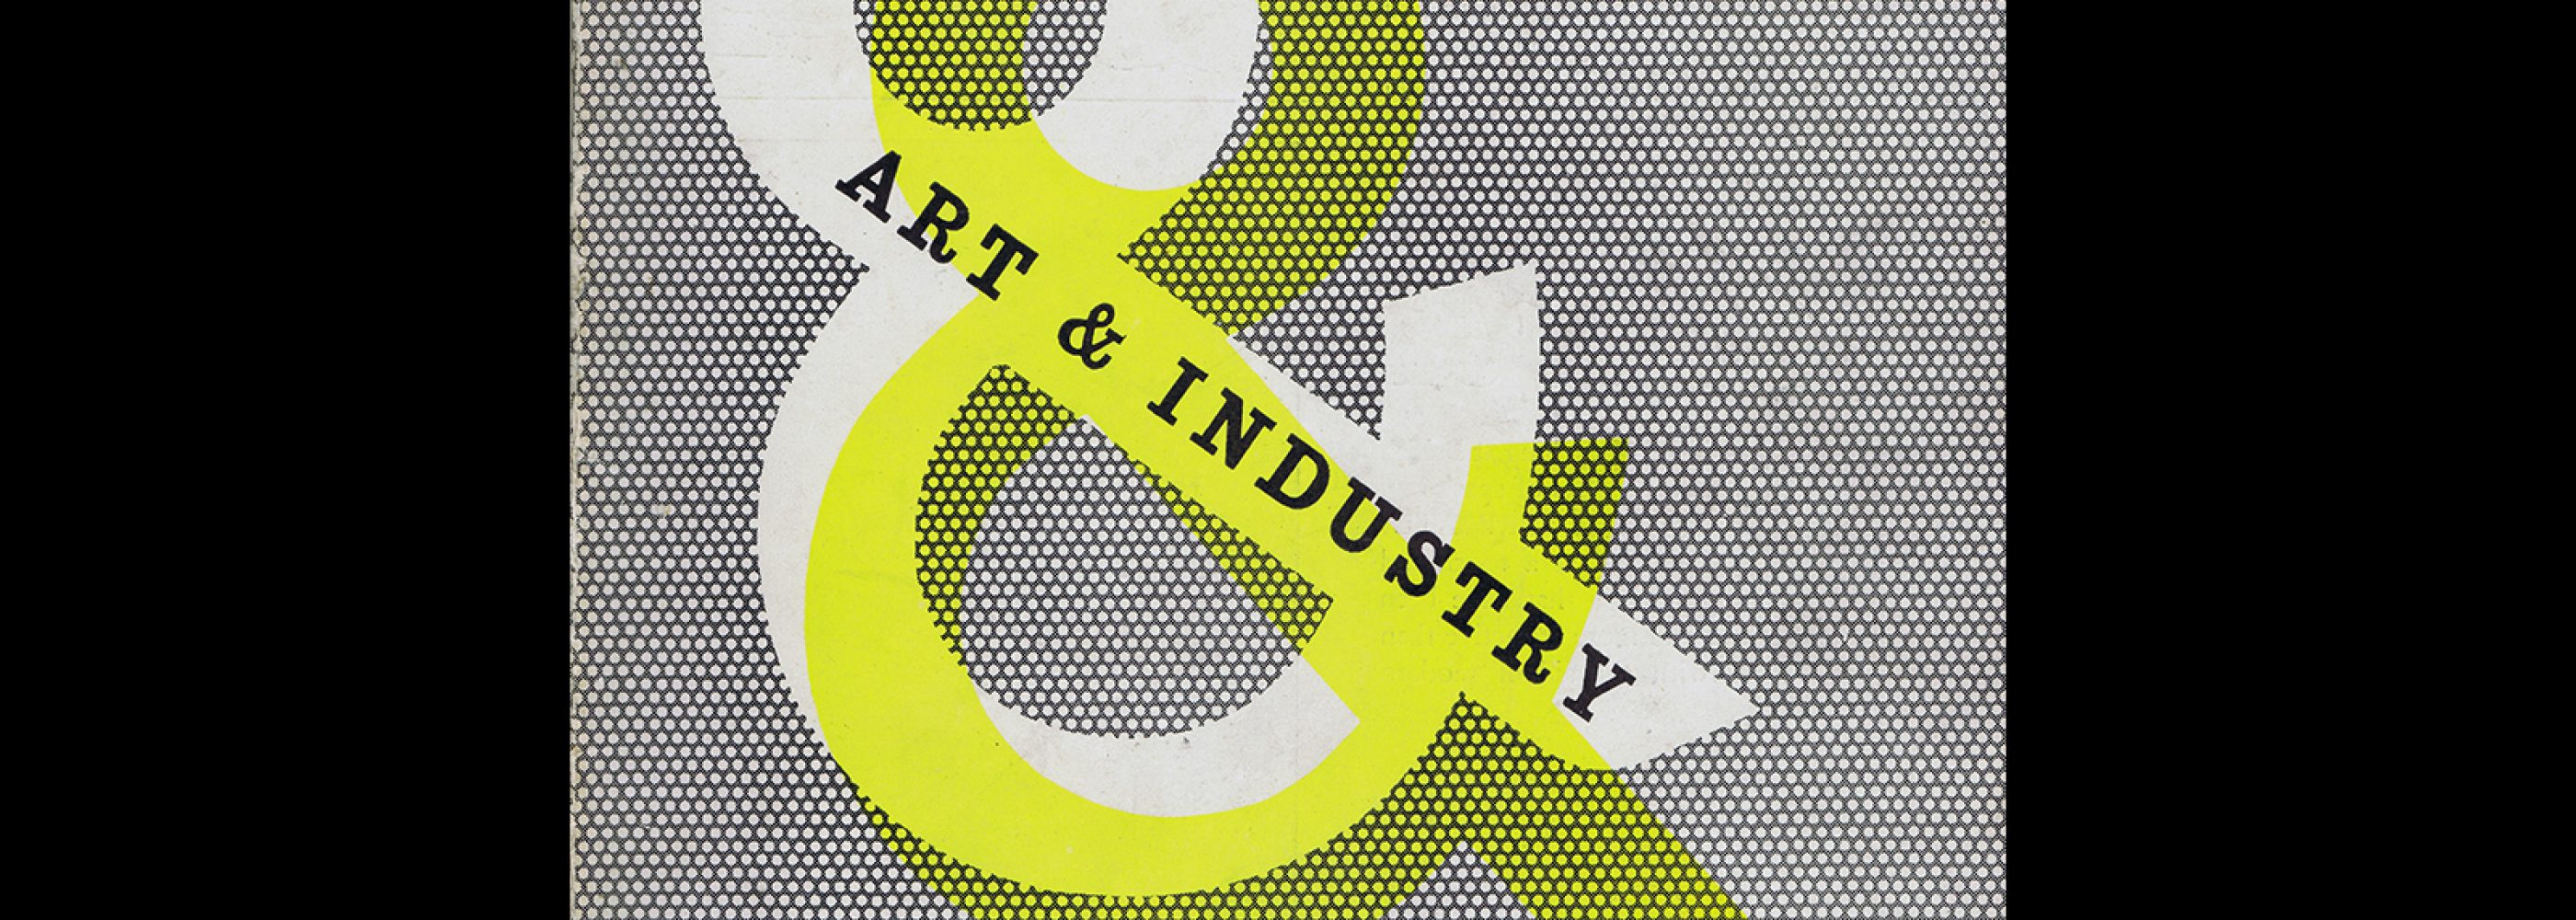 Art & Industry 283, January 1950. Cover design by Hans Schleger /Zero